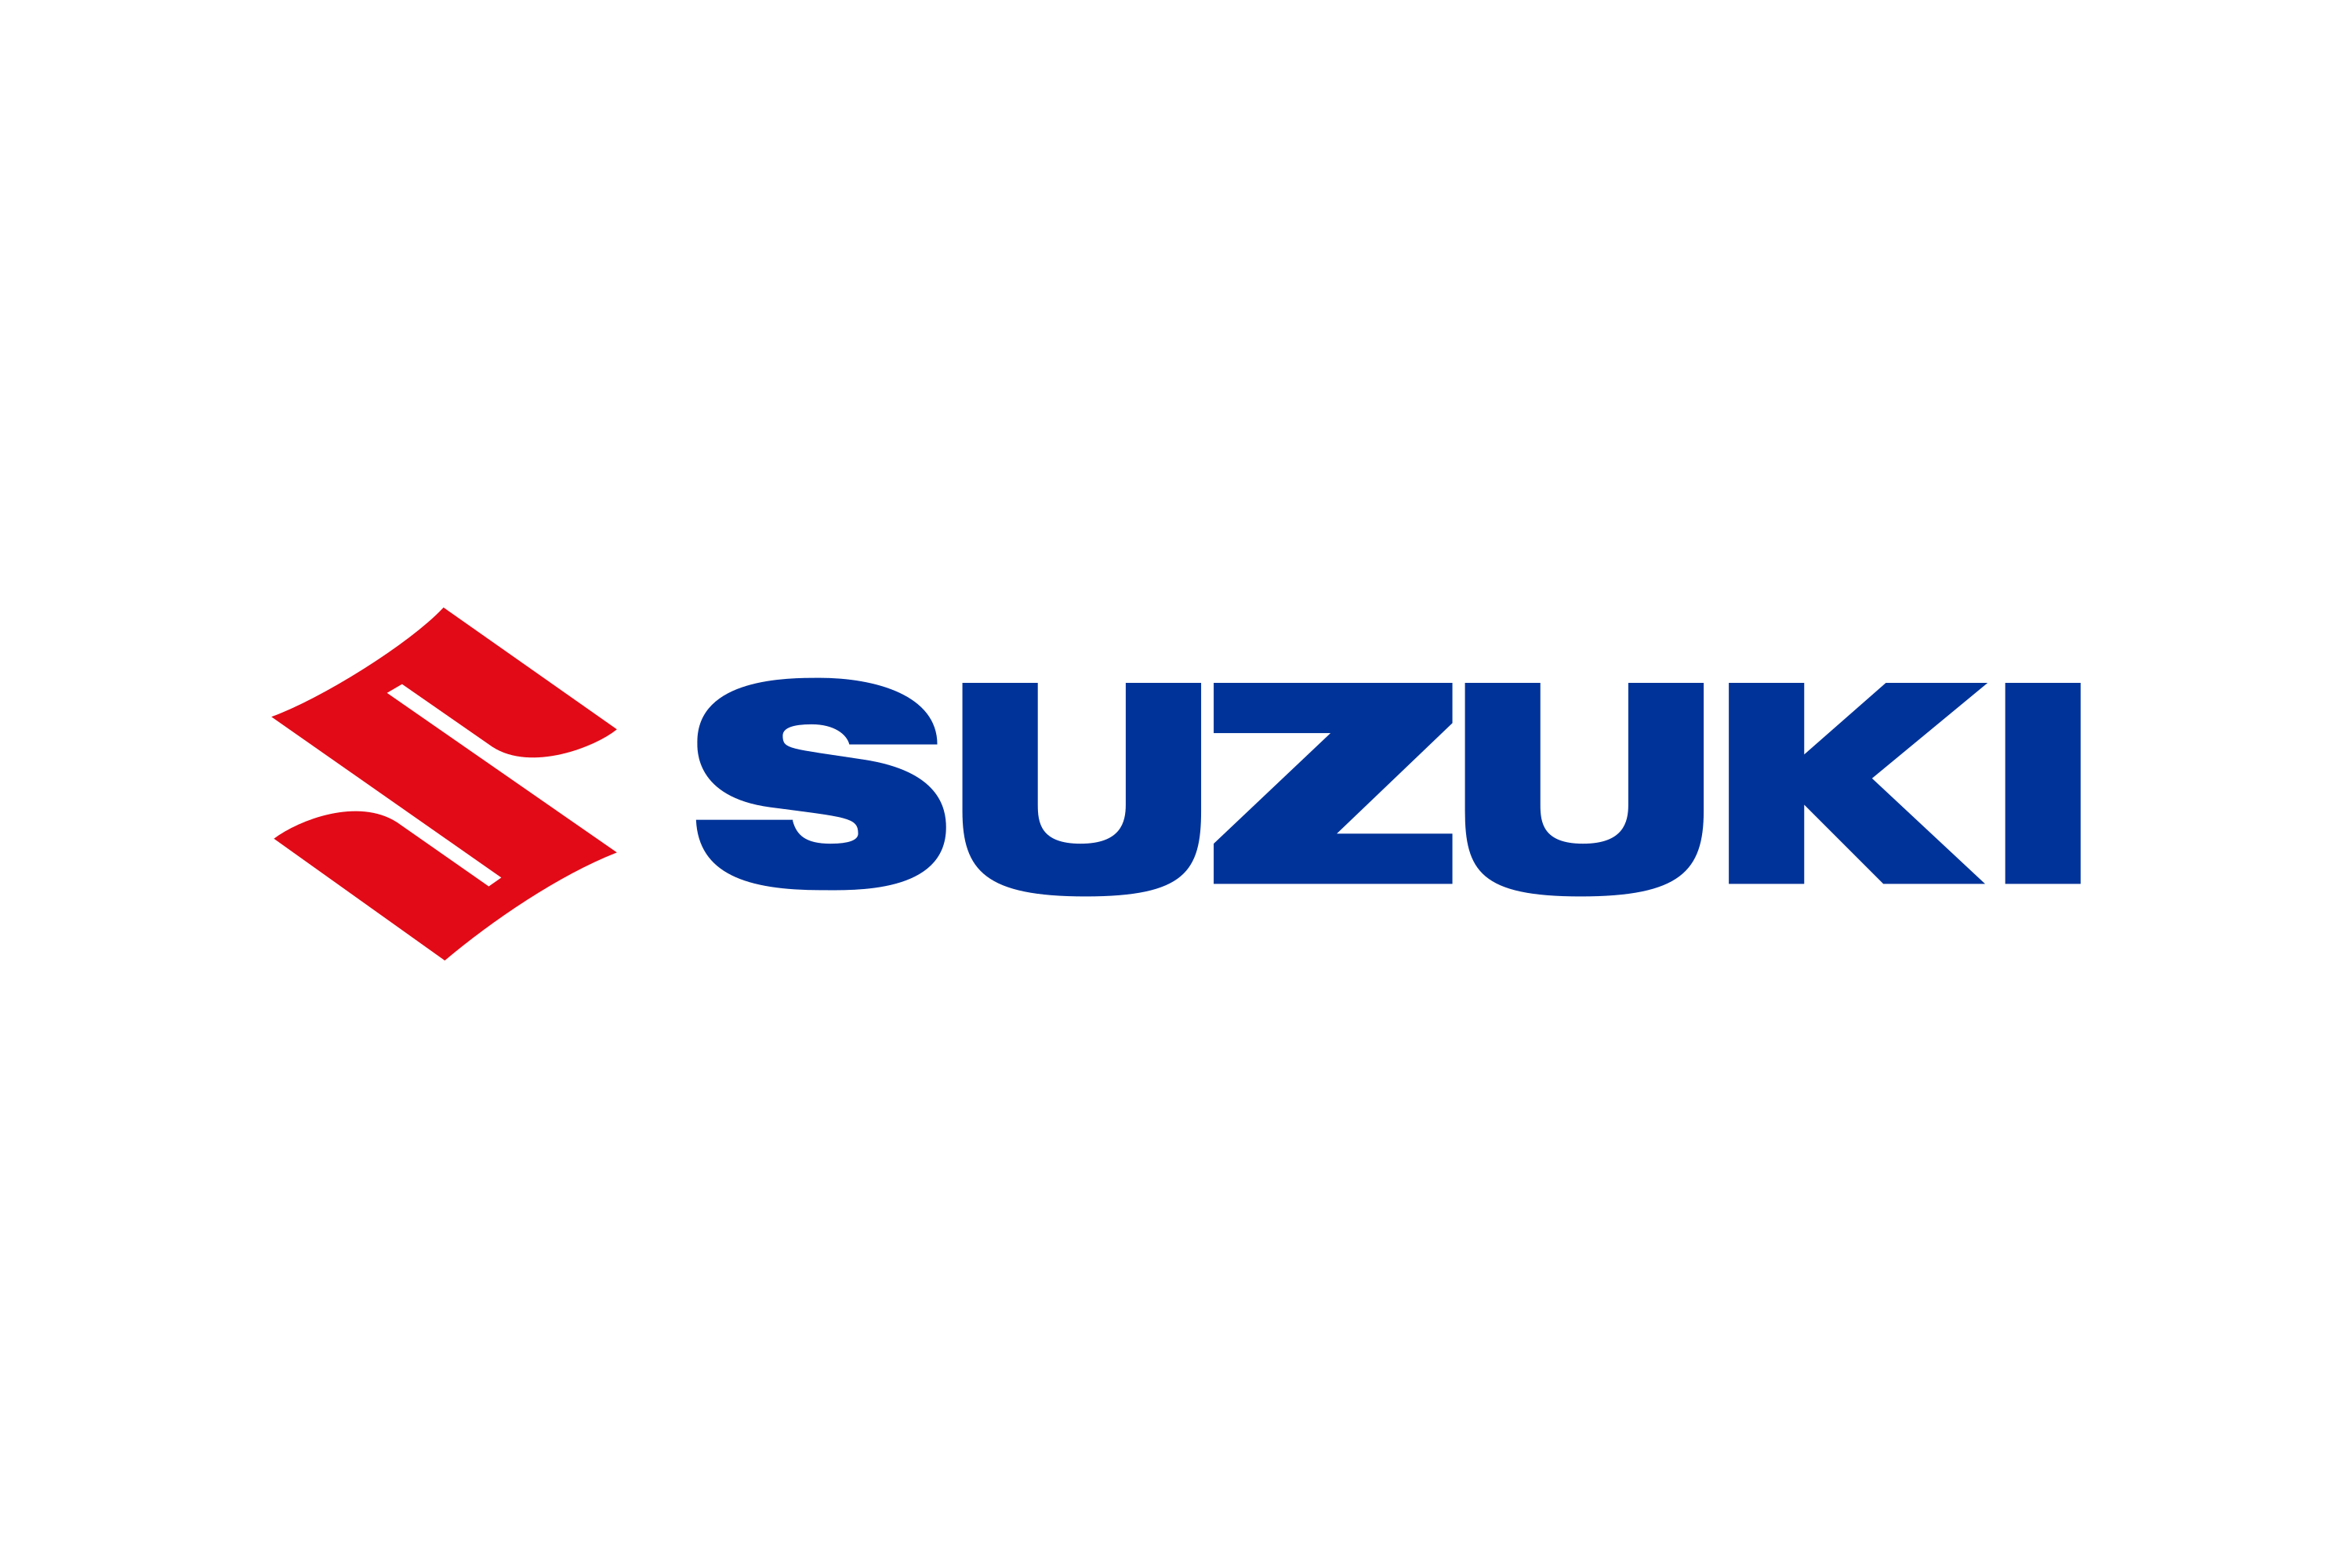 Suzuki – Logos Download